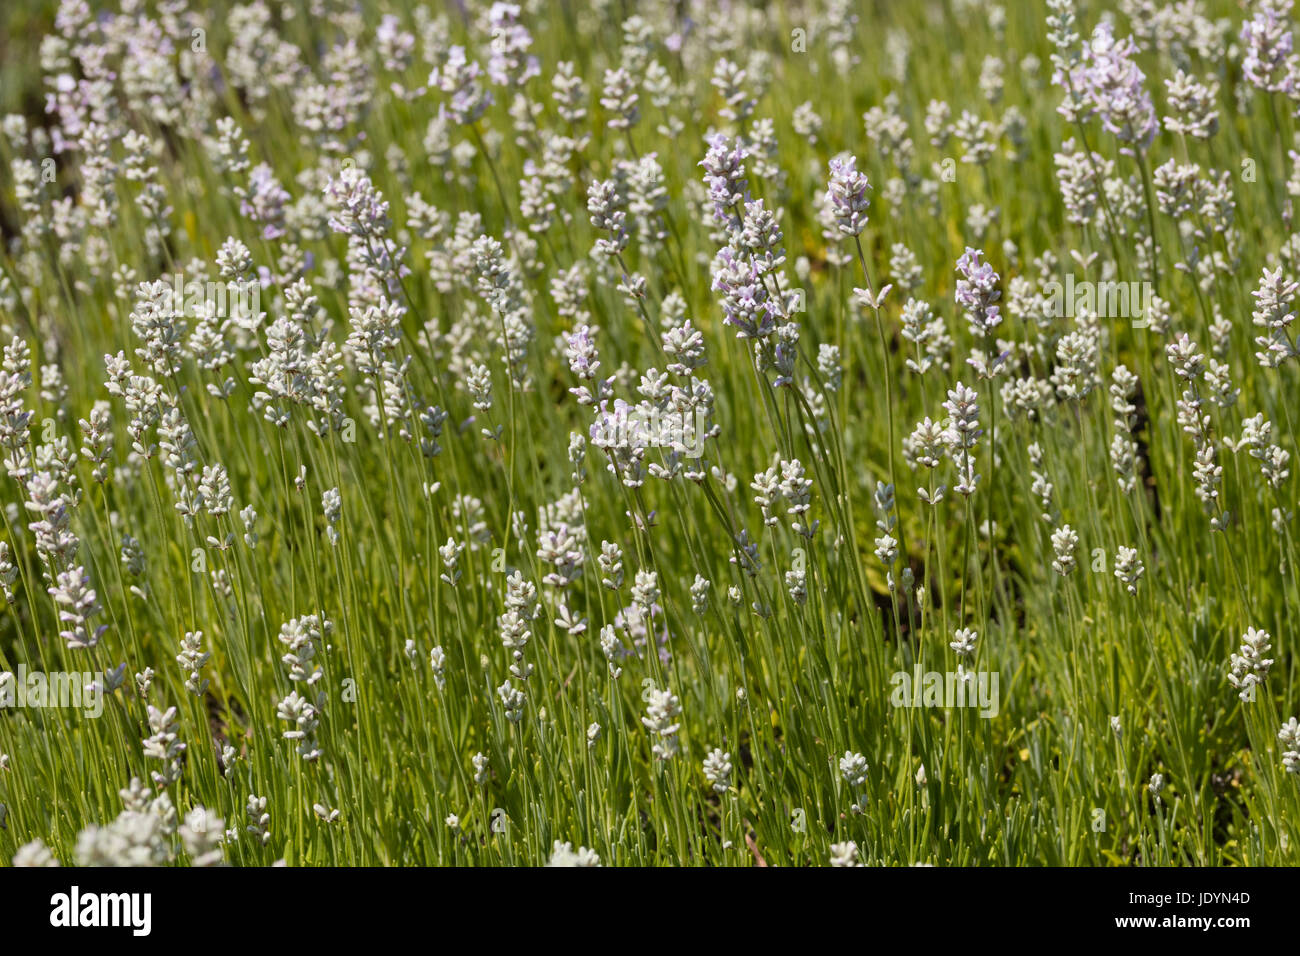 June flowers and foliage of the shrubby English lavender, Lavandula angustifolia 'Rosea' Stock Photo